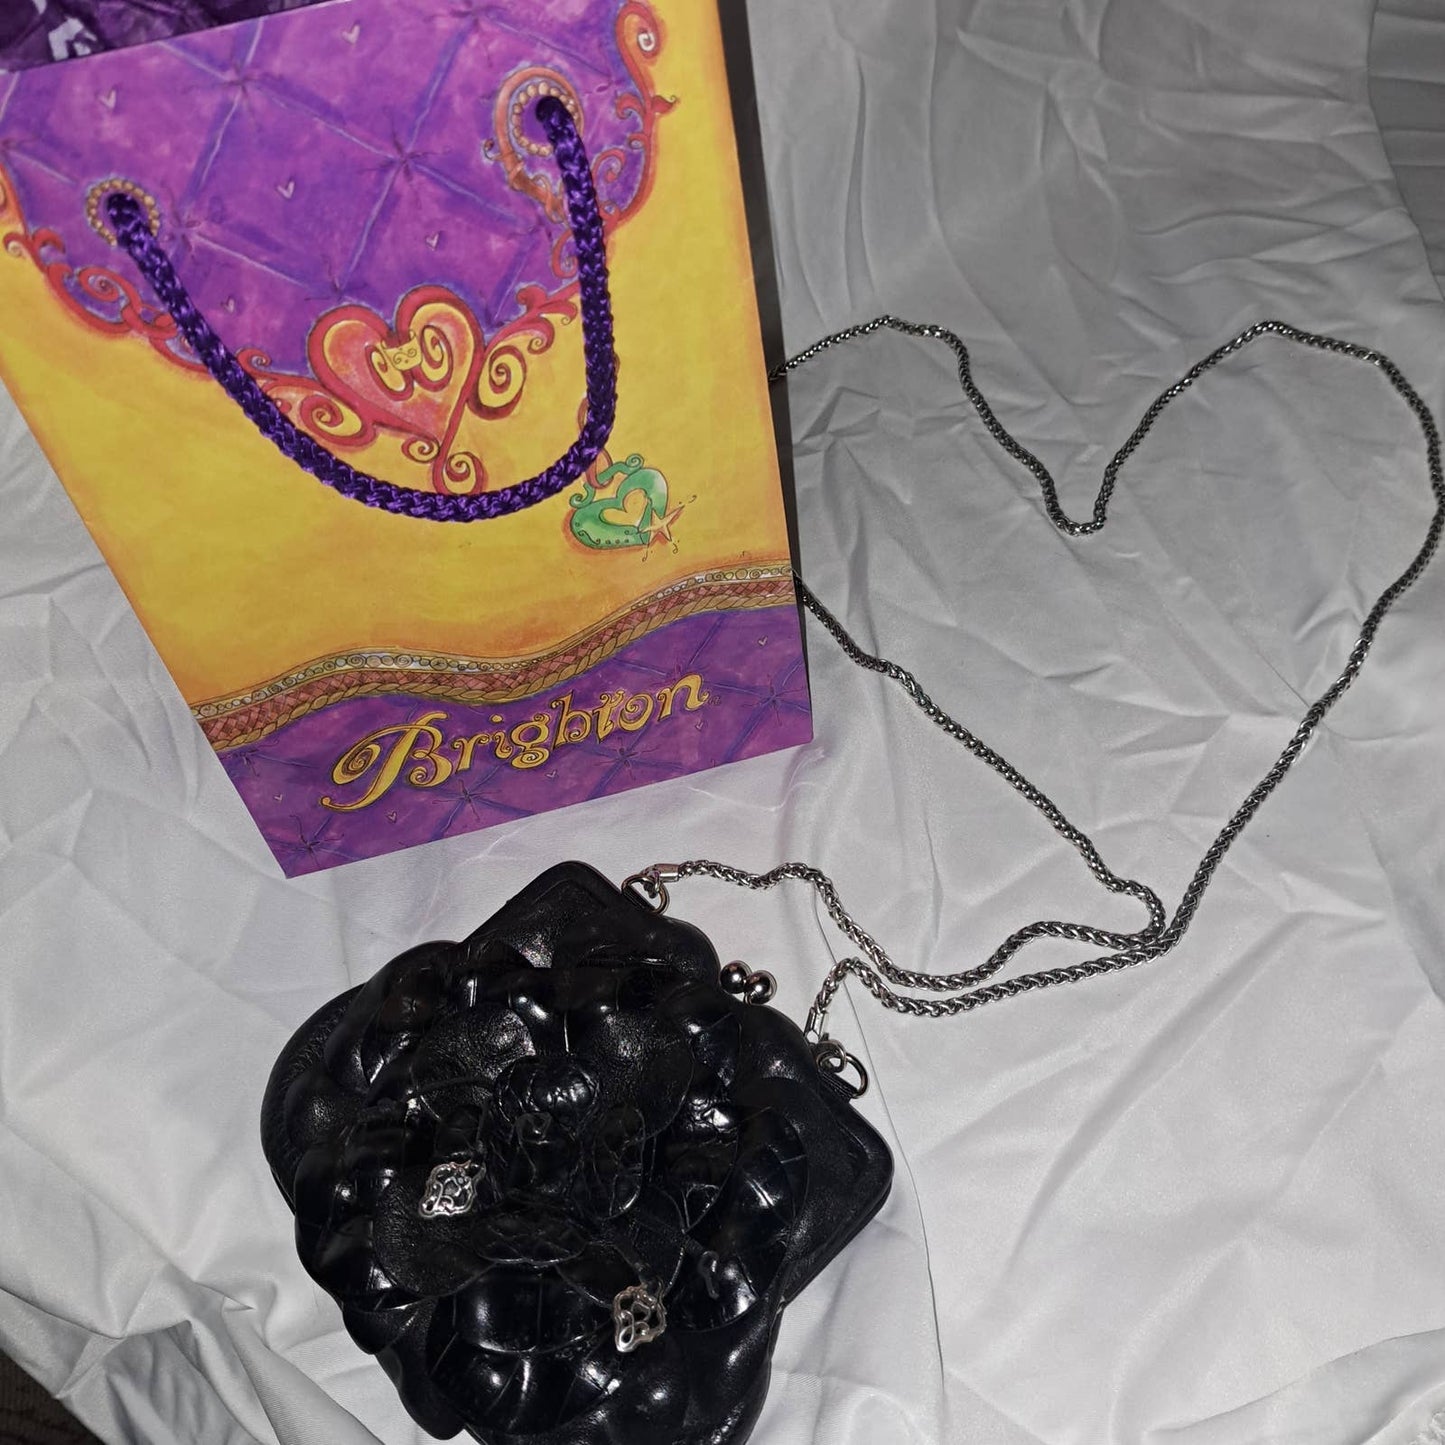 Brighton Roselie MINI Purse Flower Petal Black Leather 23" Chain Strap